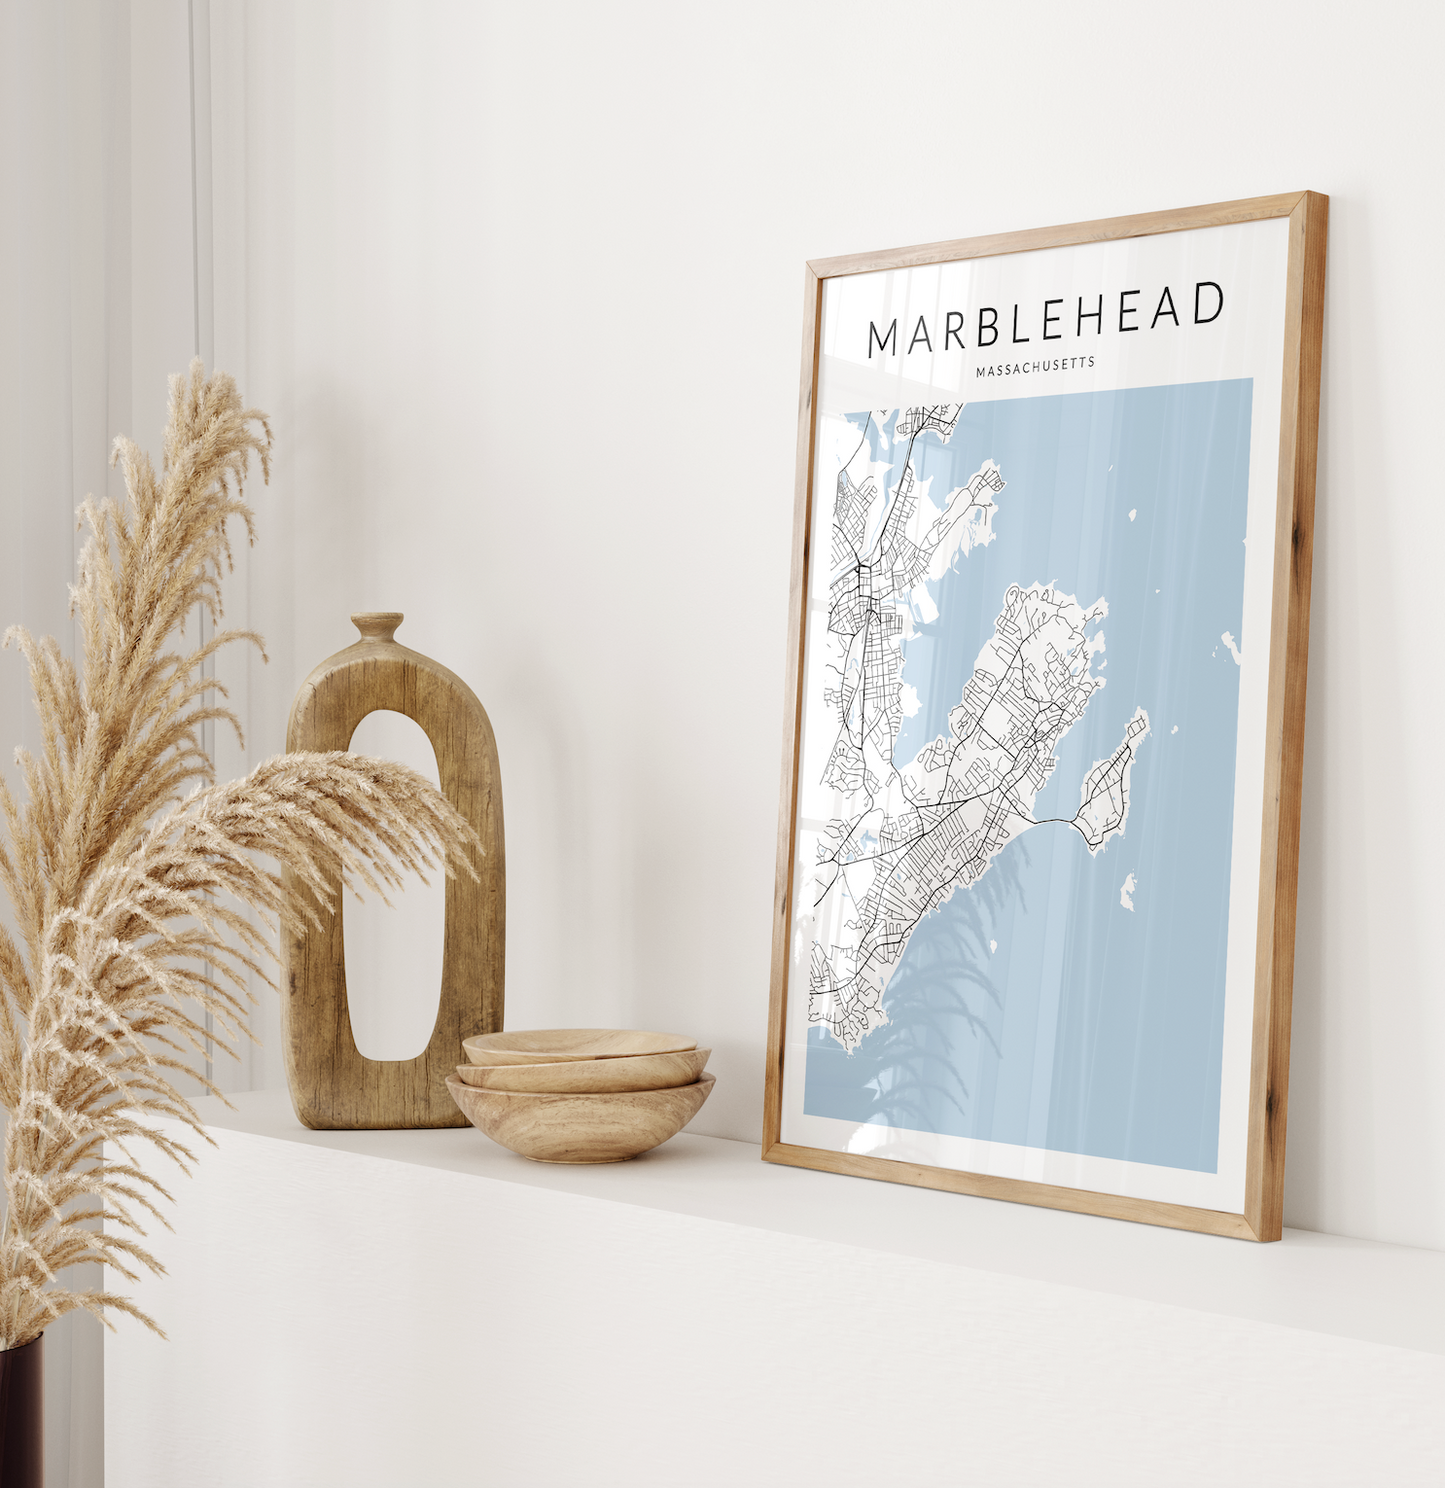 Marblehead Map Print